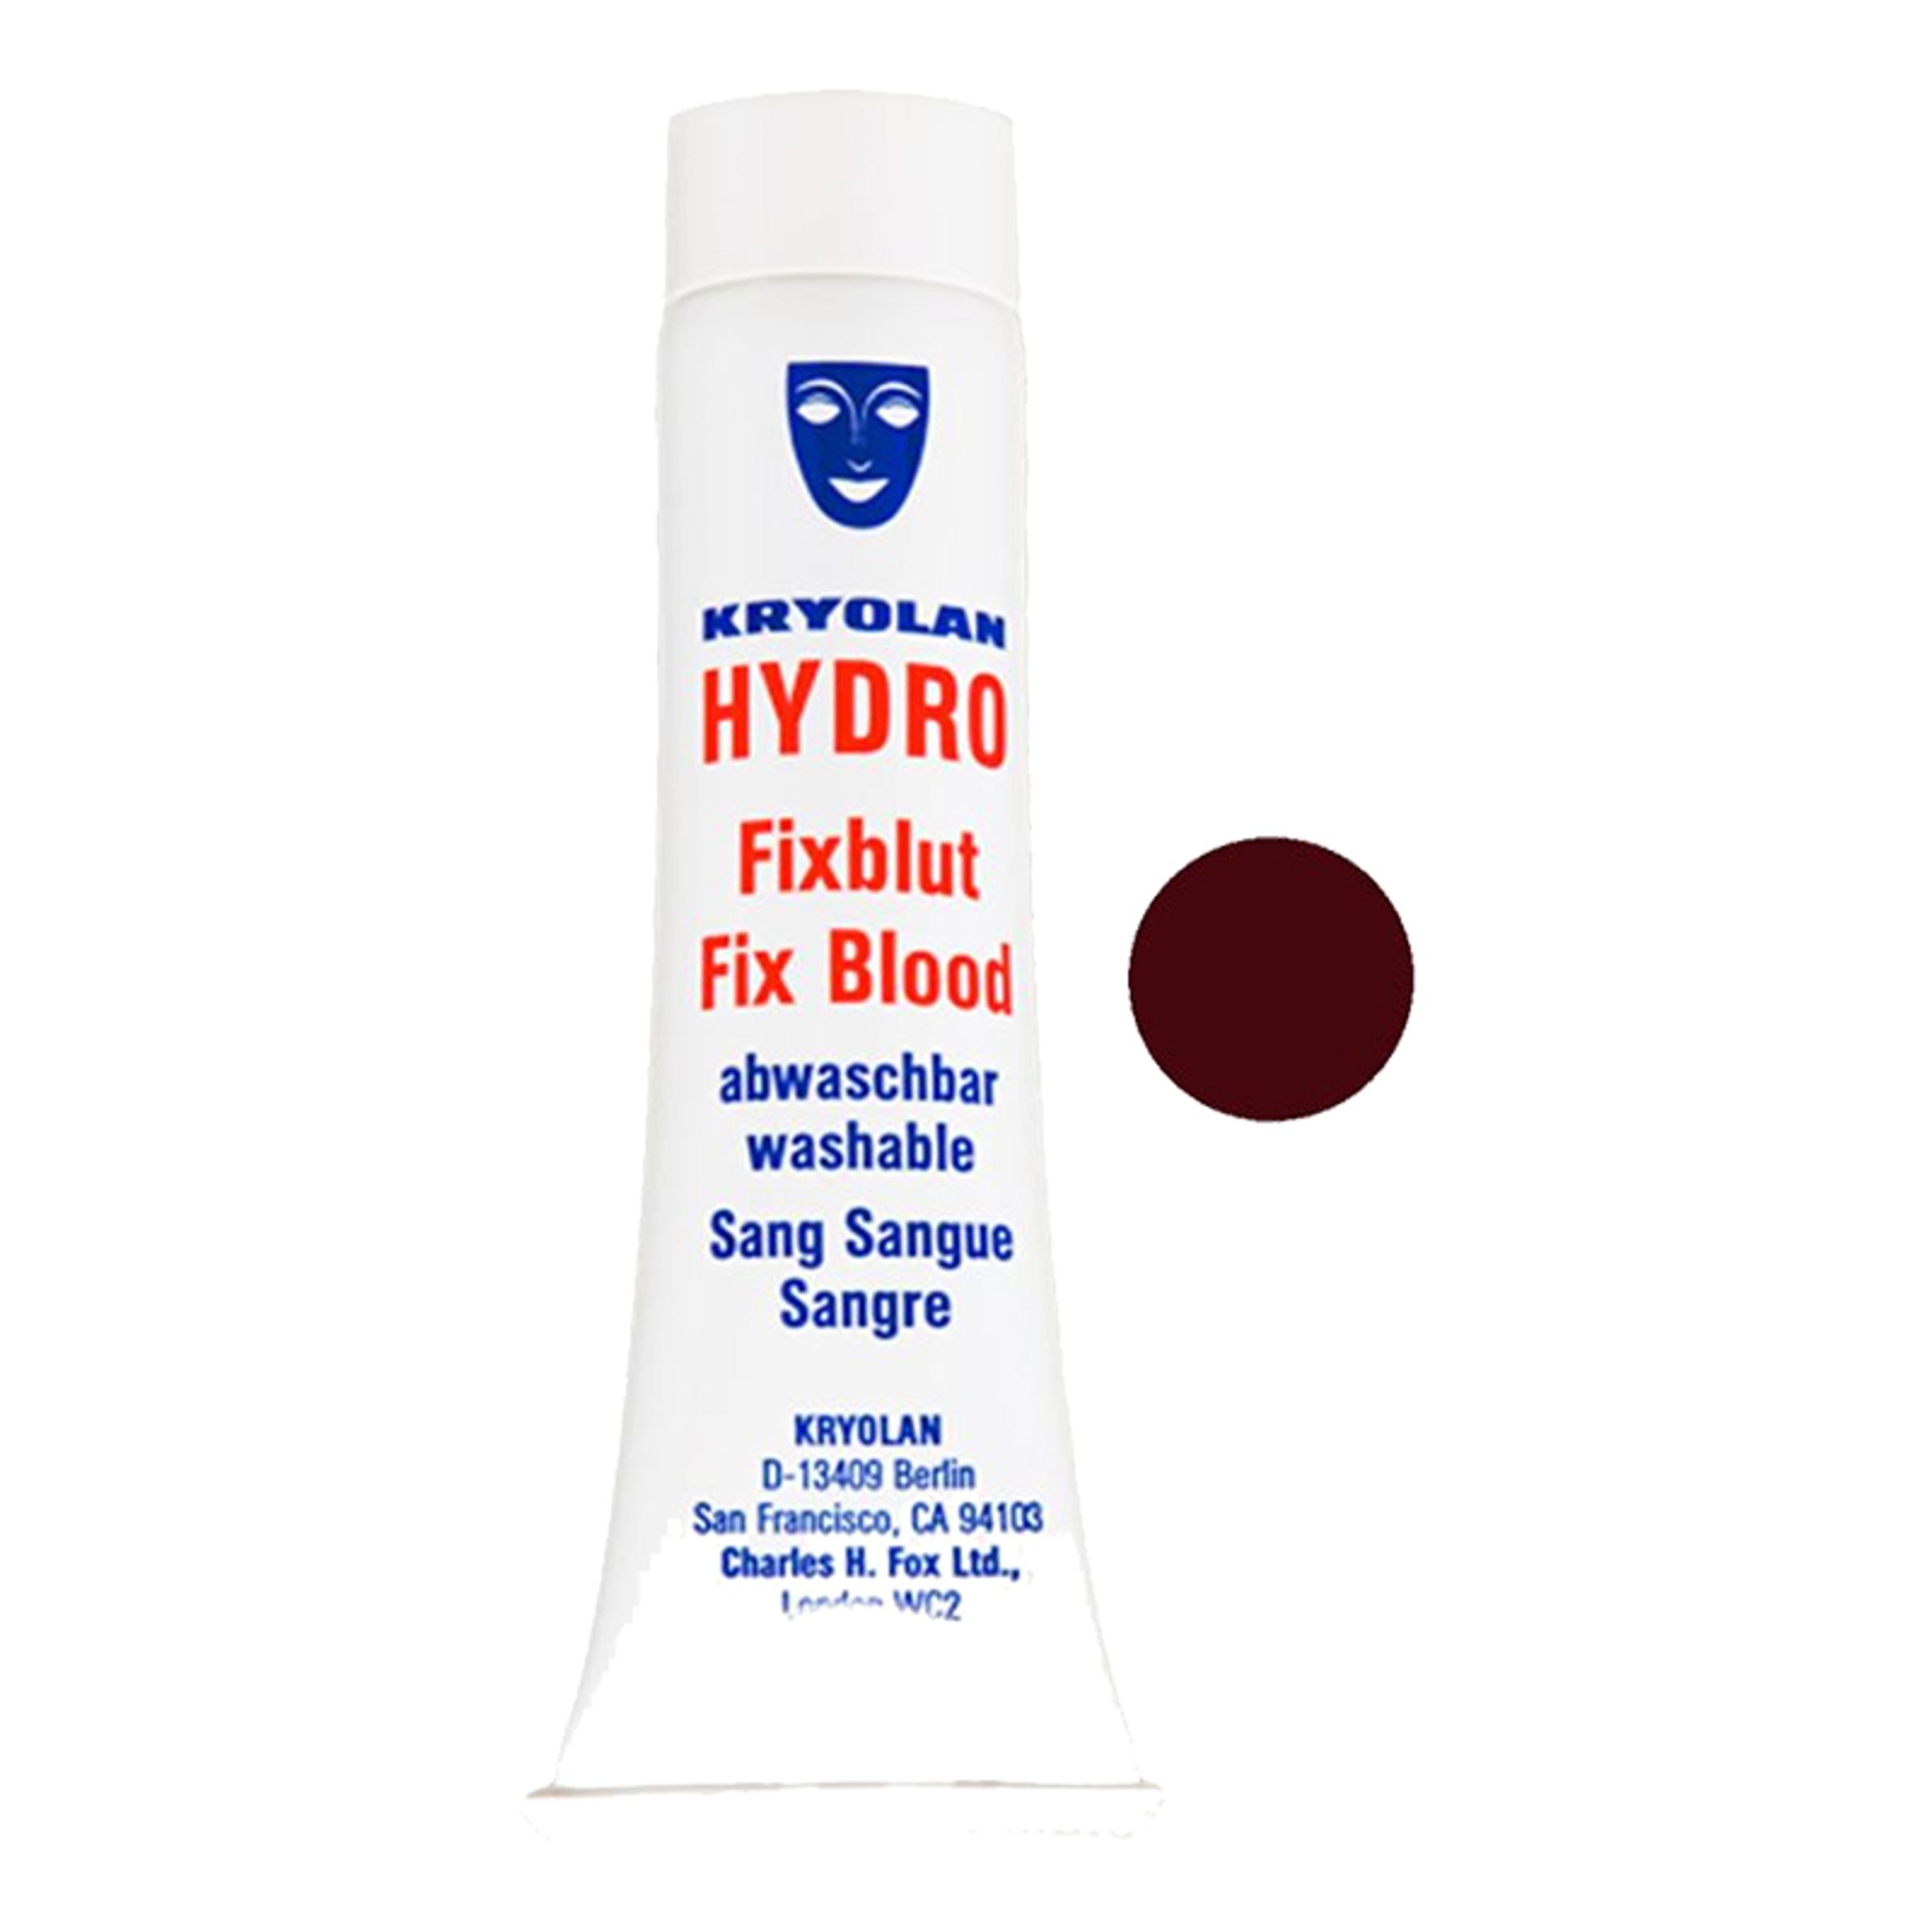 Kryolan Hydro Fix Blod - 20 ml